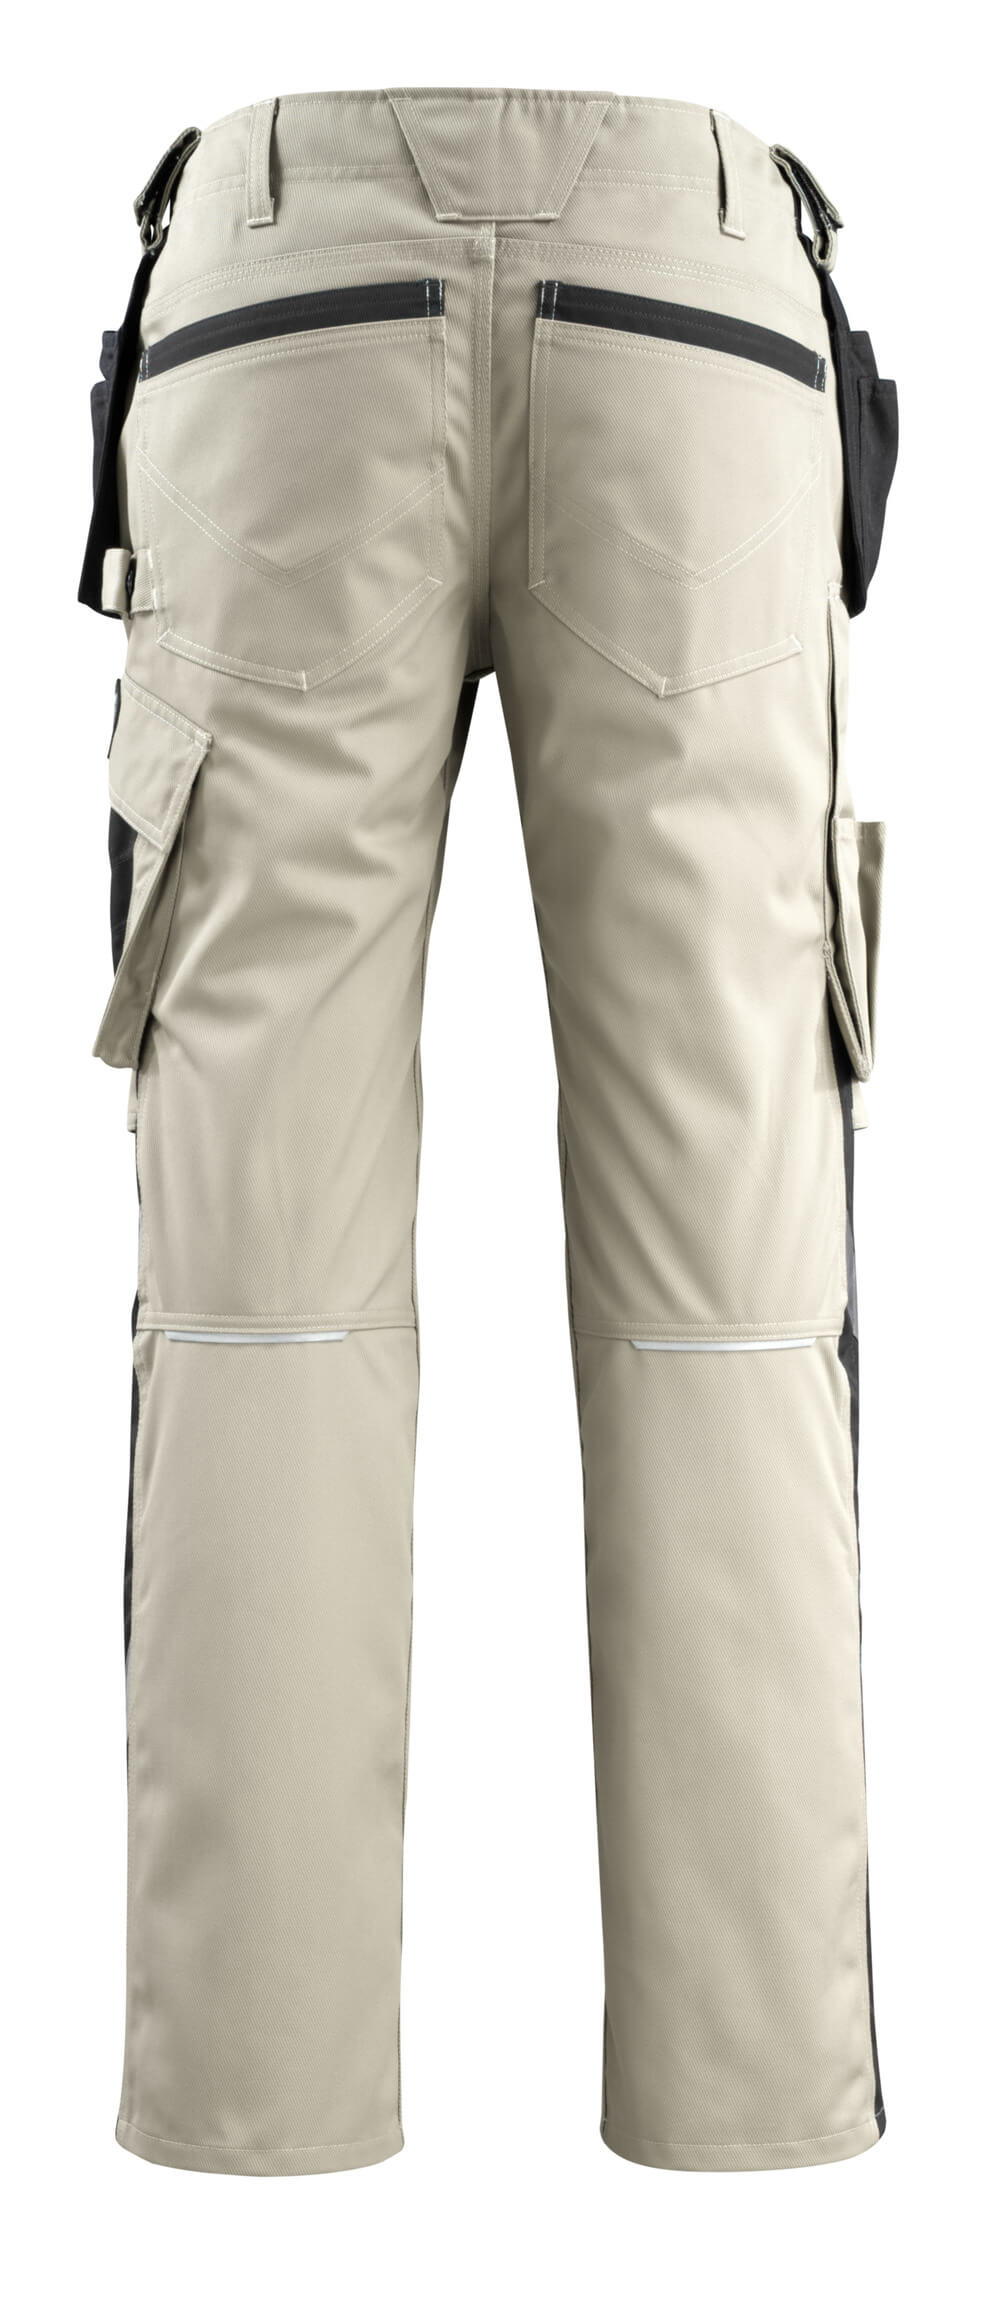 Mascot UNIQUE  Bremen Trousers with holster pockets 14031 light khaki/black